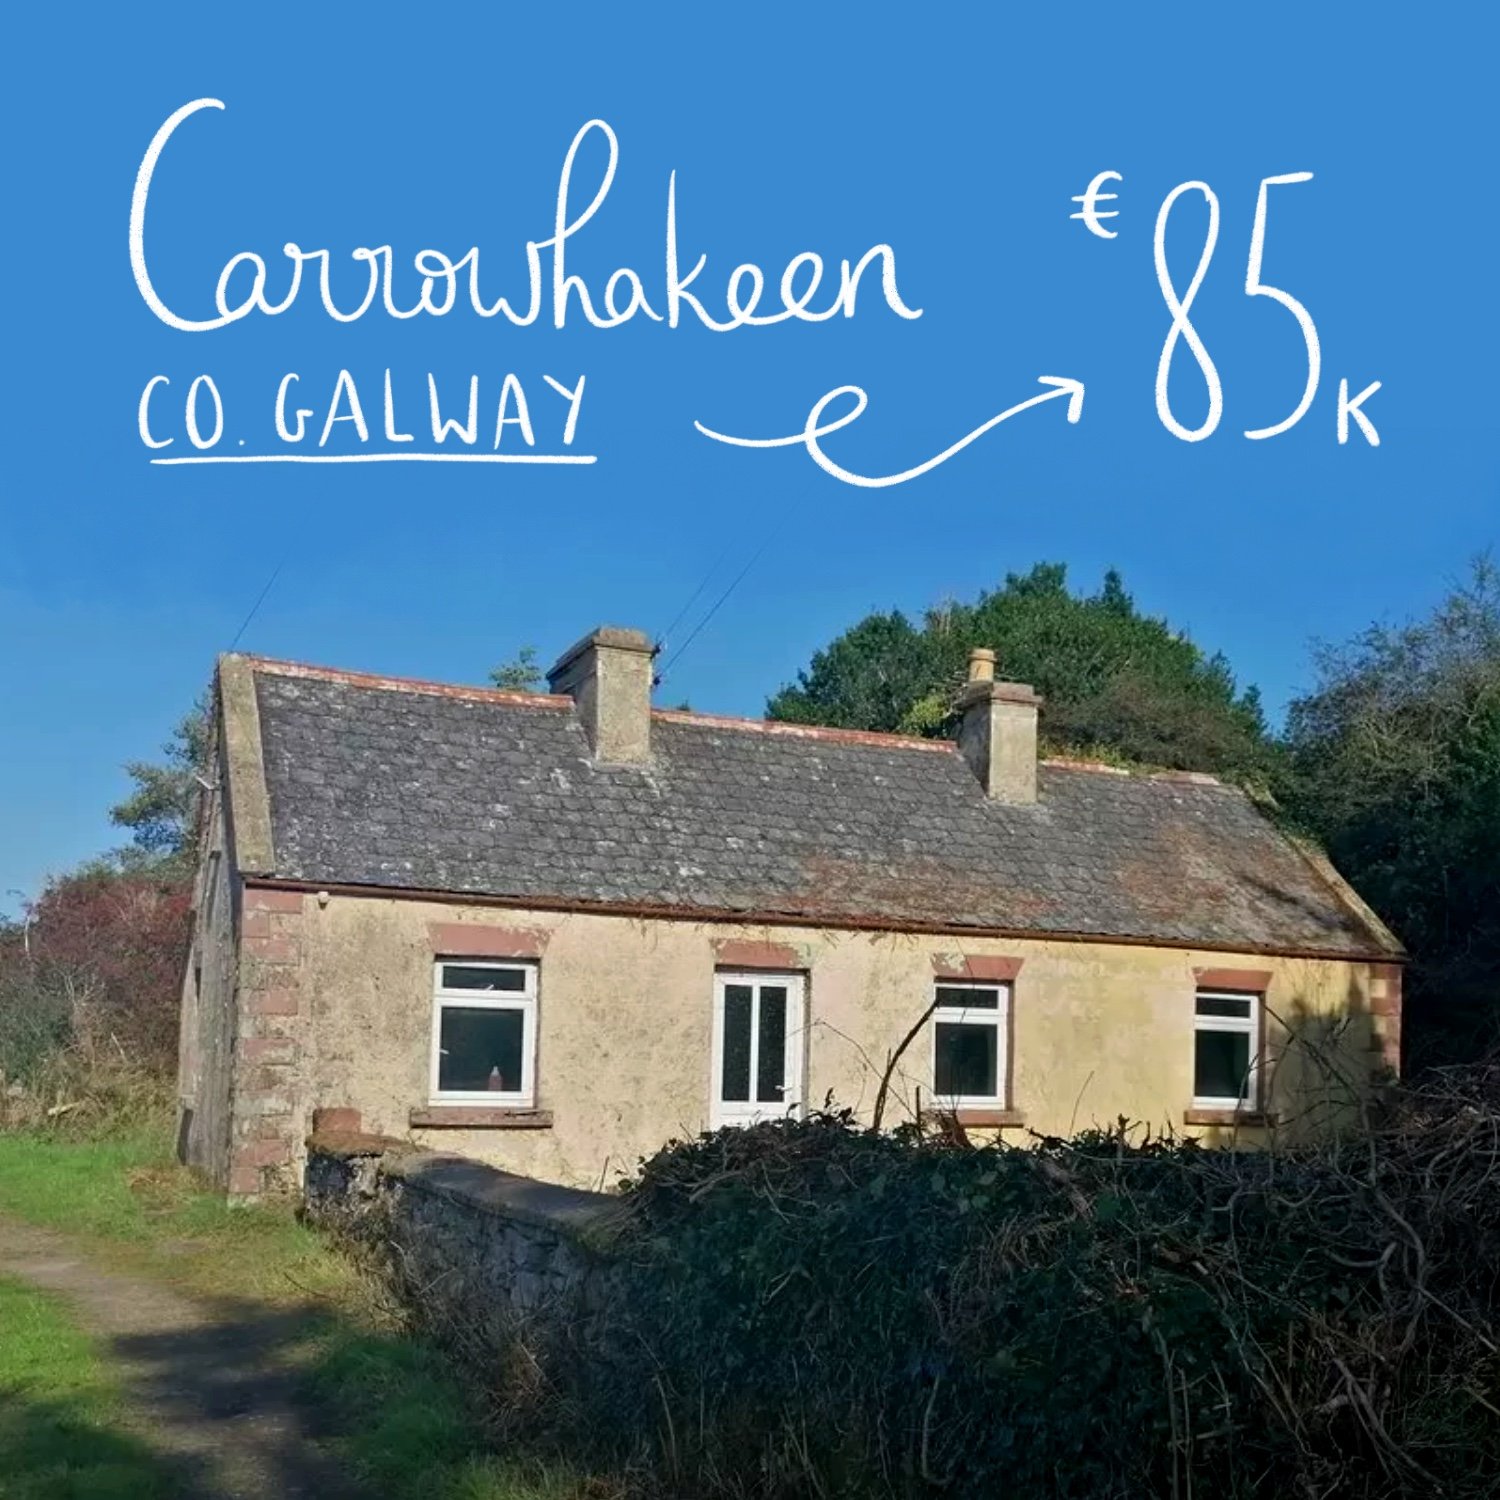 Carrowhakeen, Co. Galway. €85k